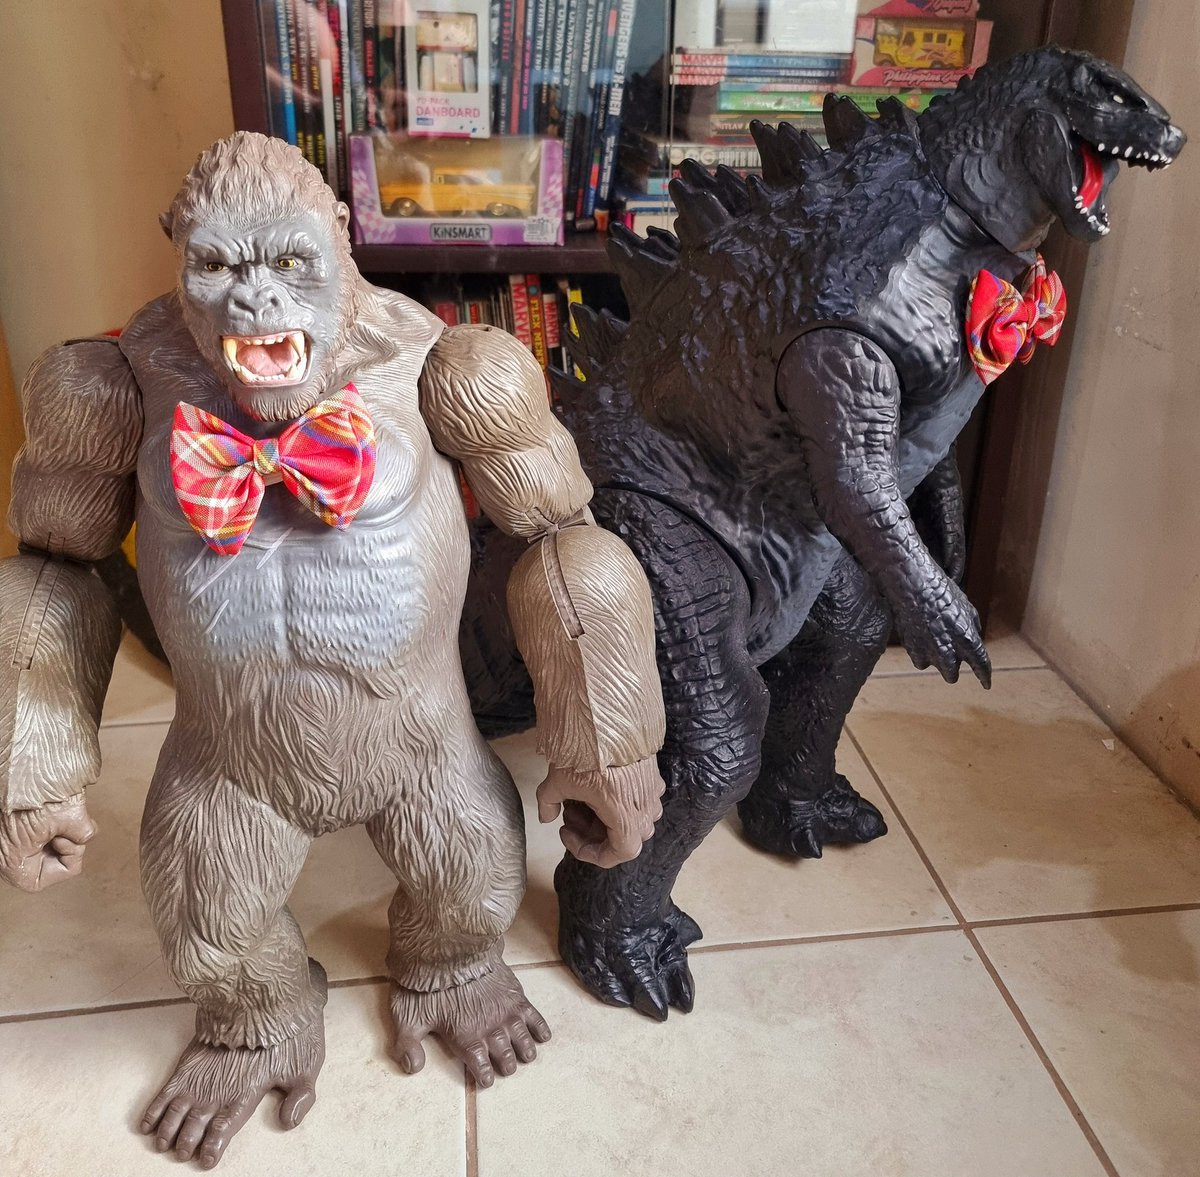 Kong and Godzilla all dolled up...+2 at the Oscars show or gatecrashers?  🤔🤔🤔

#GodzillaMinusOne 
#Oscars2024 
#godzillaxkong